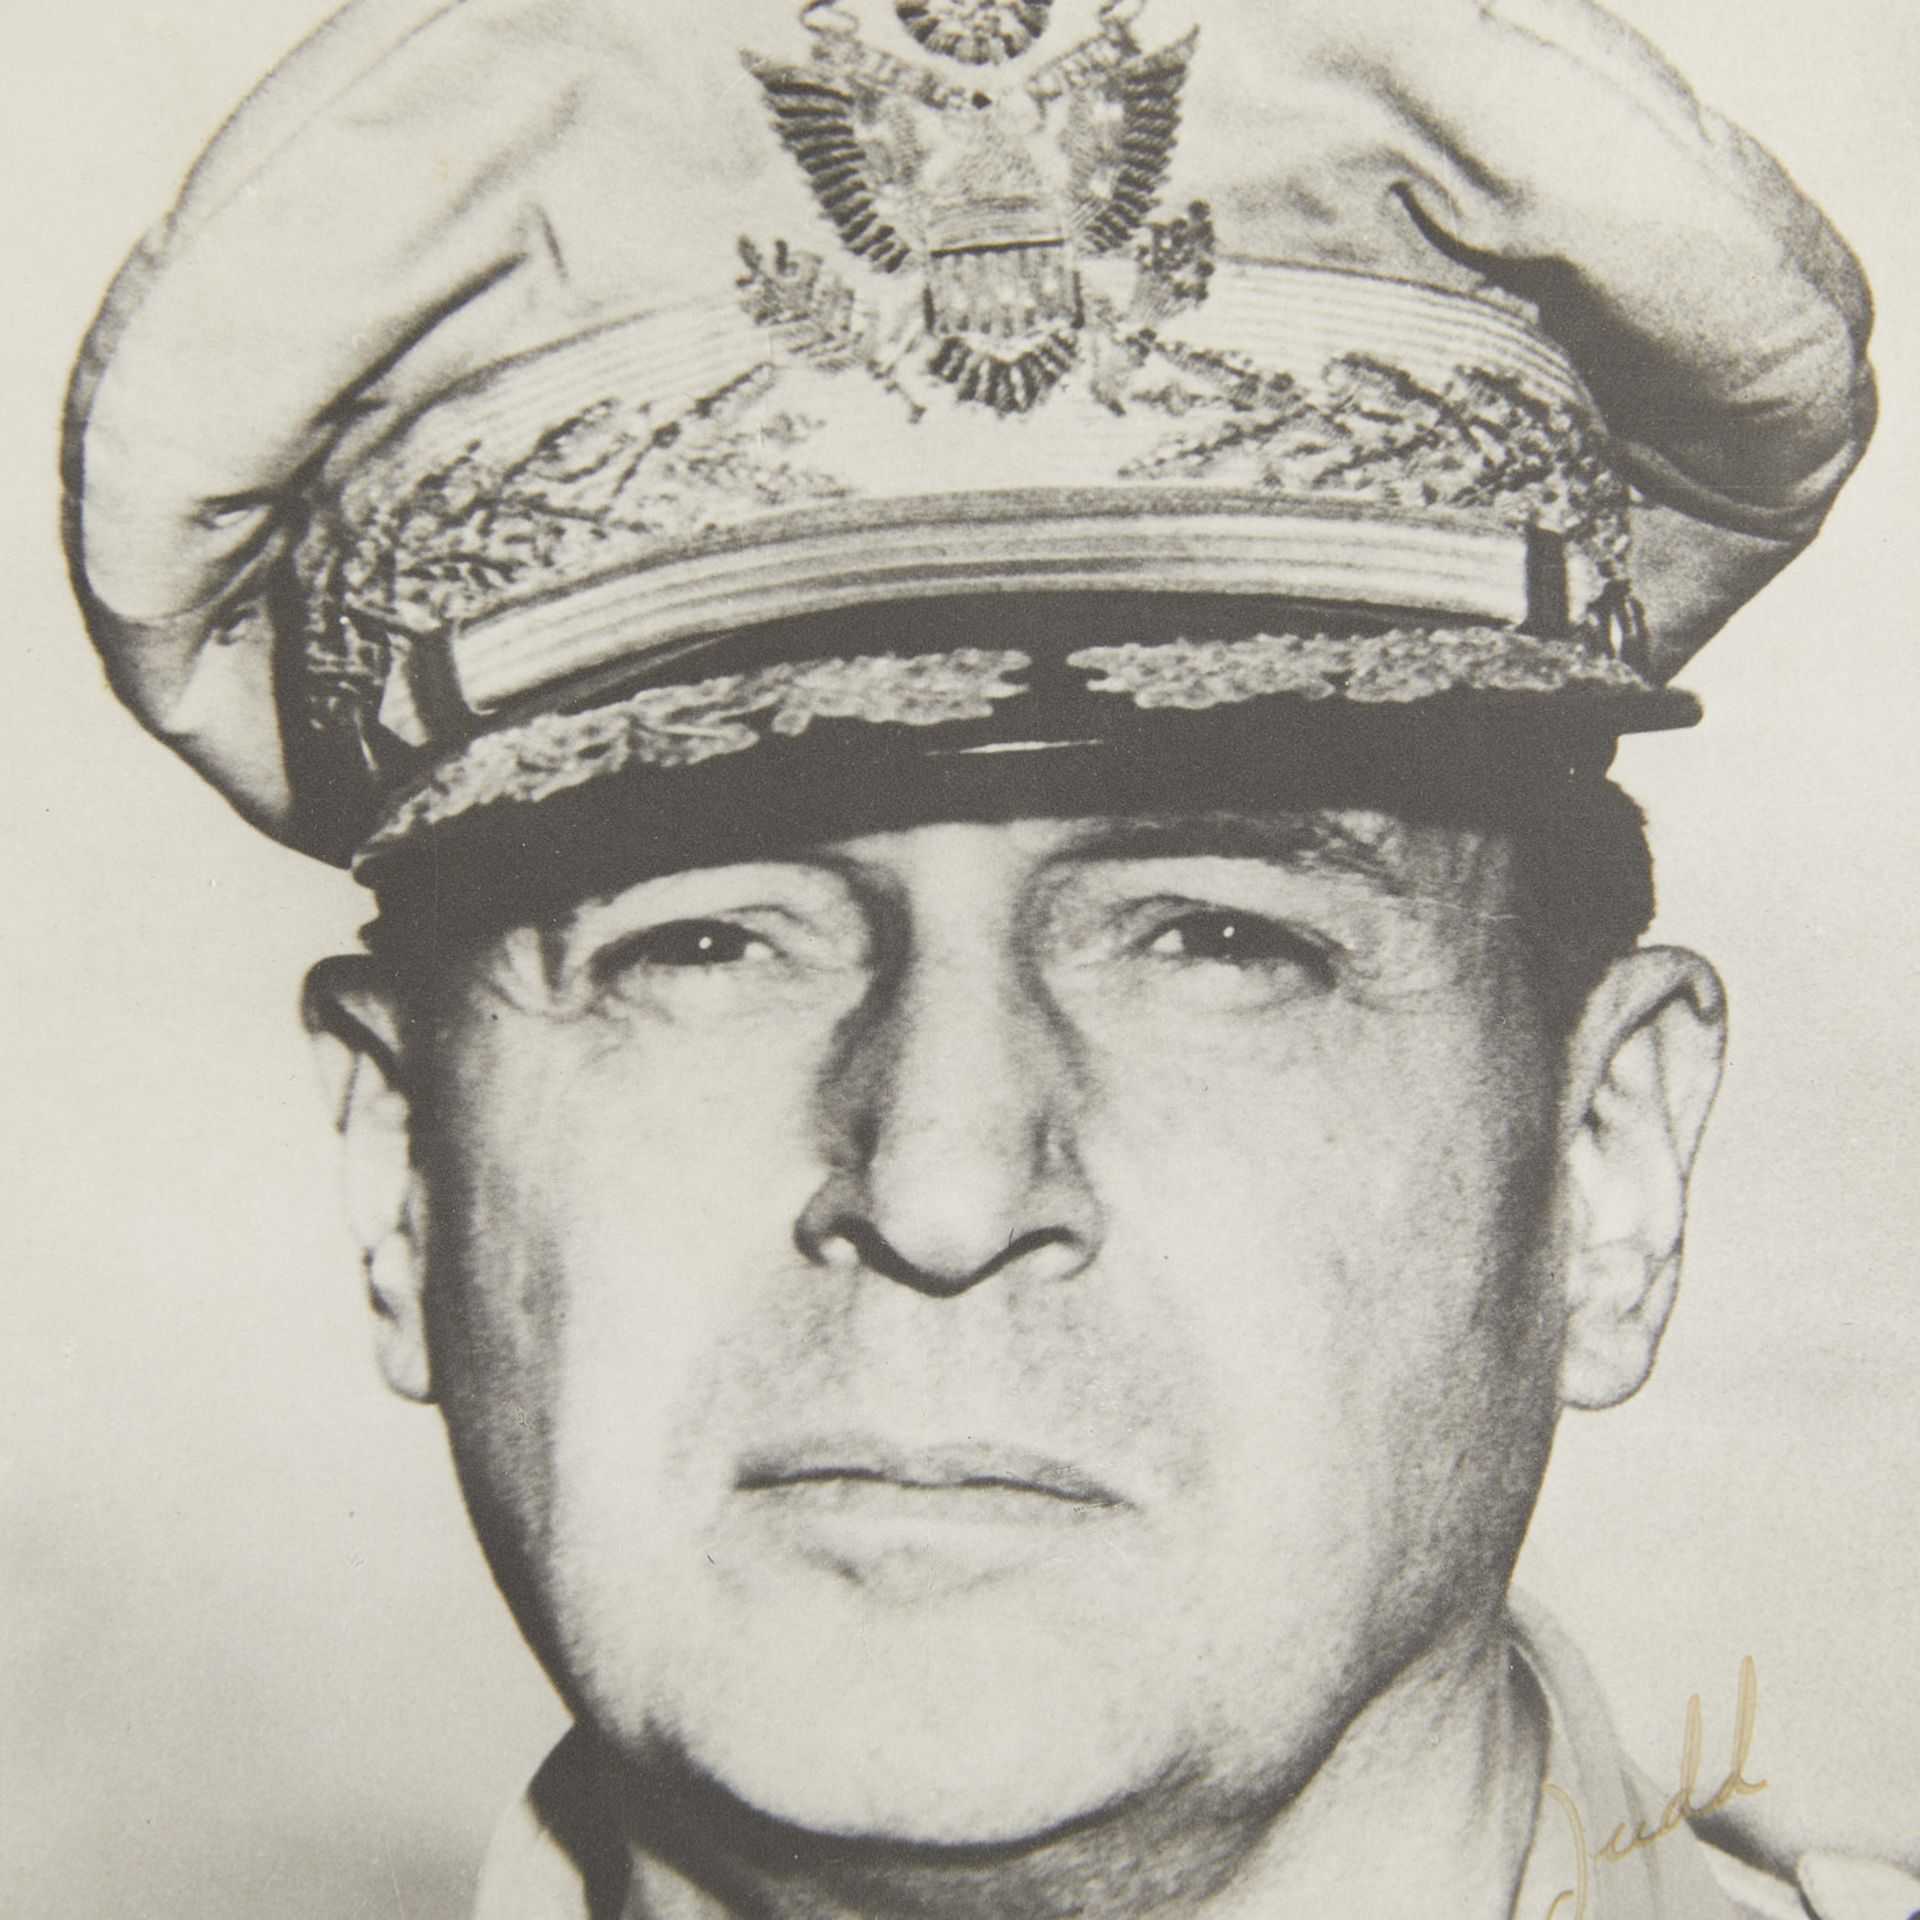 Autographed Photo of General Douglas MacArthur - Image 4 of 6